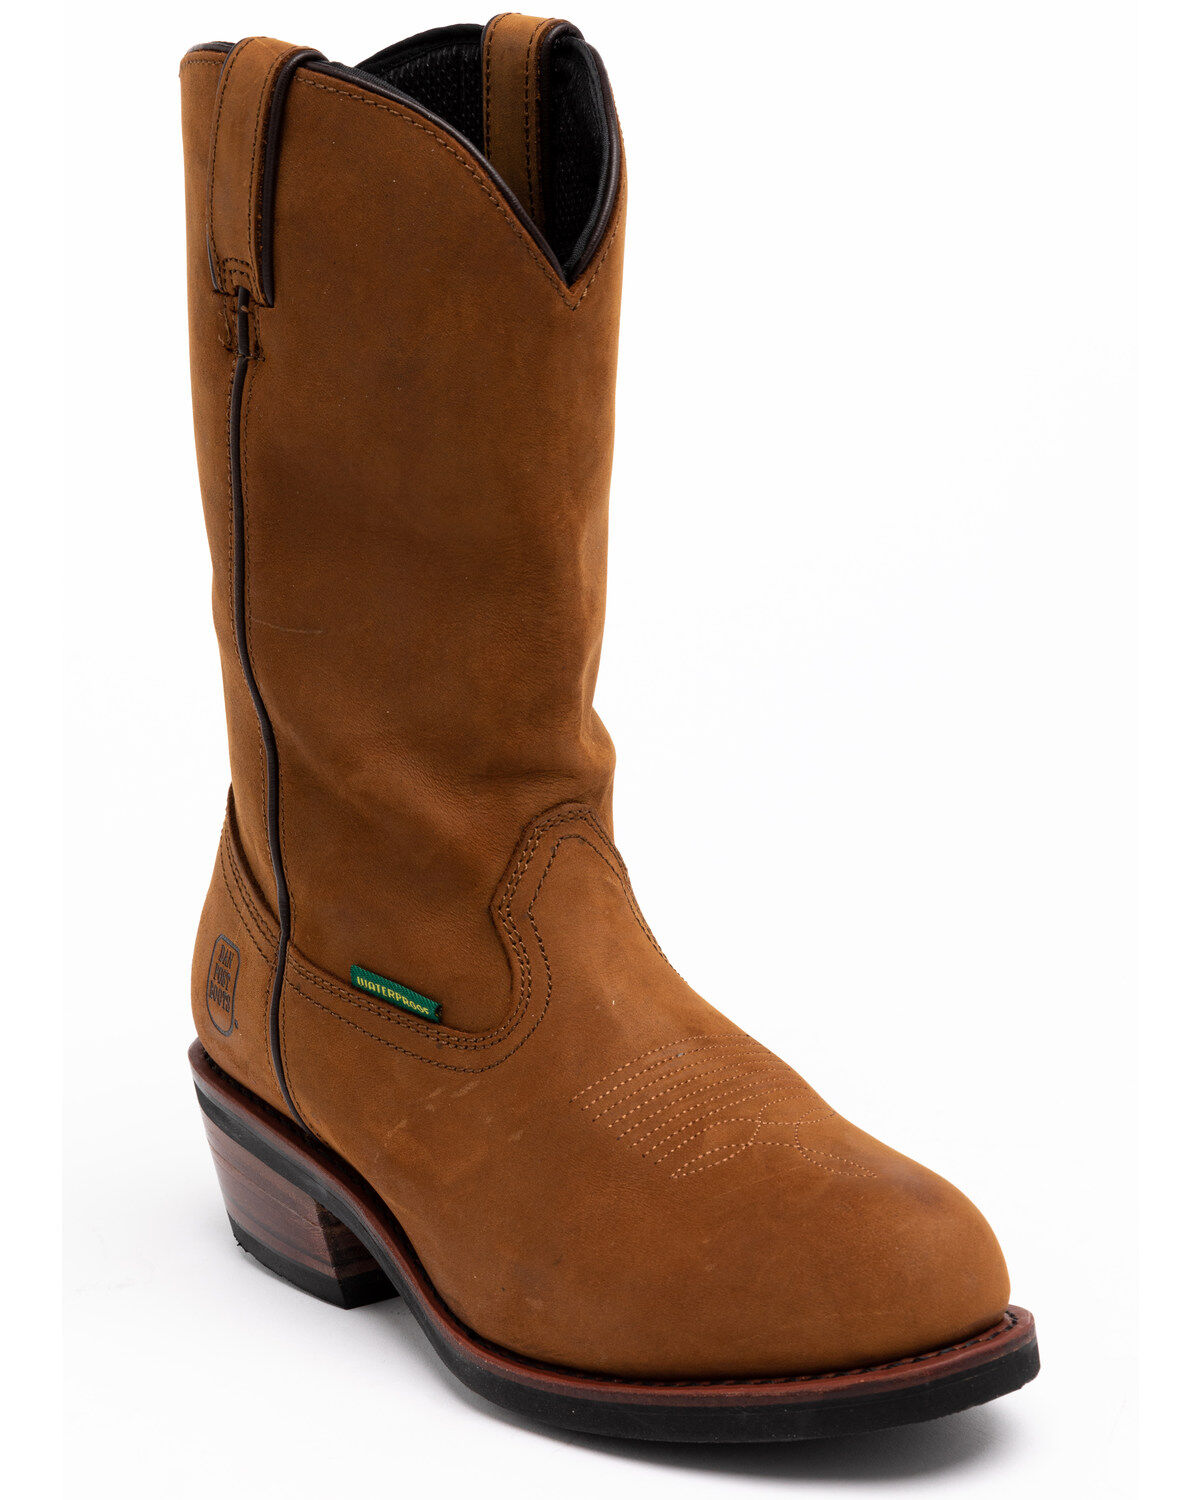 size 16 mens cowboy boots